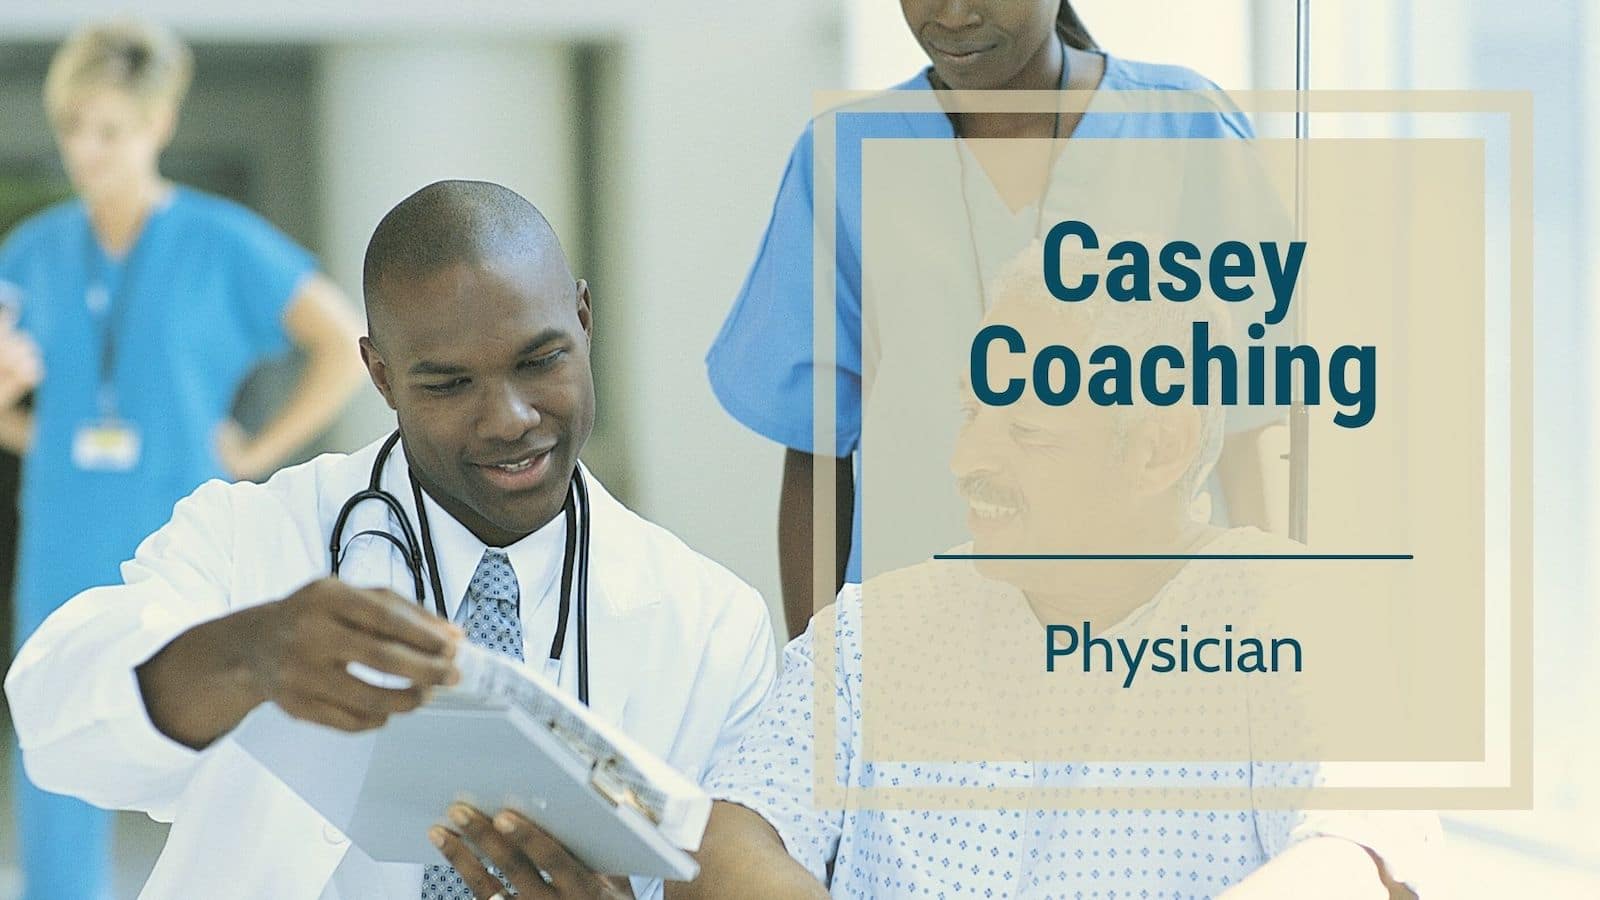 Gold: Casey Coaching-Physician